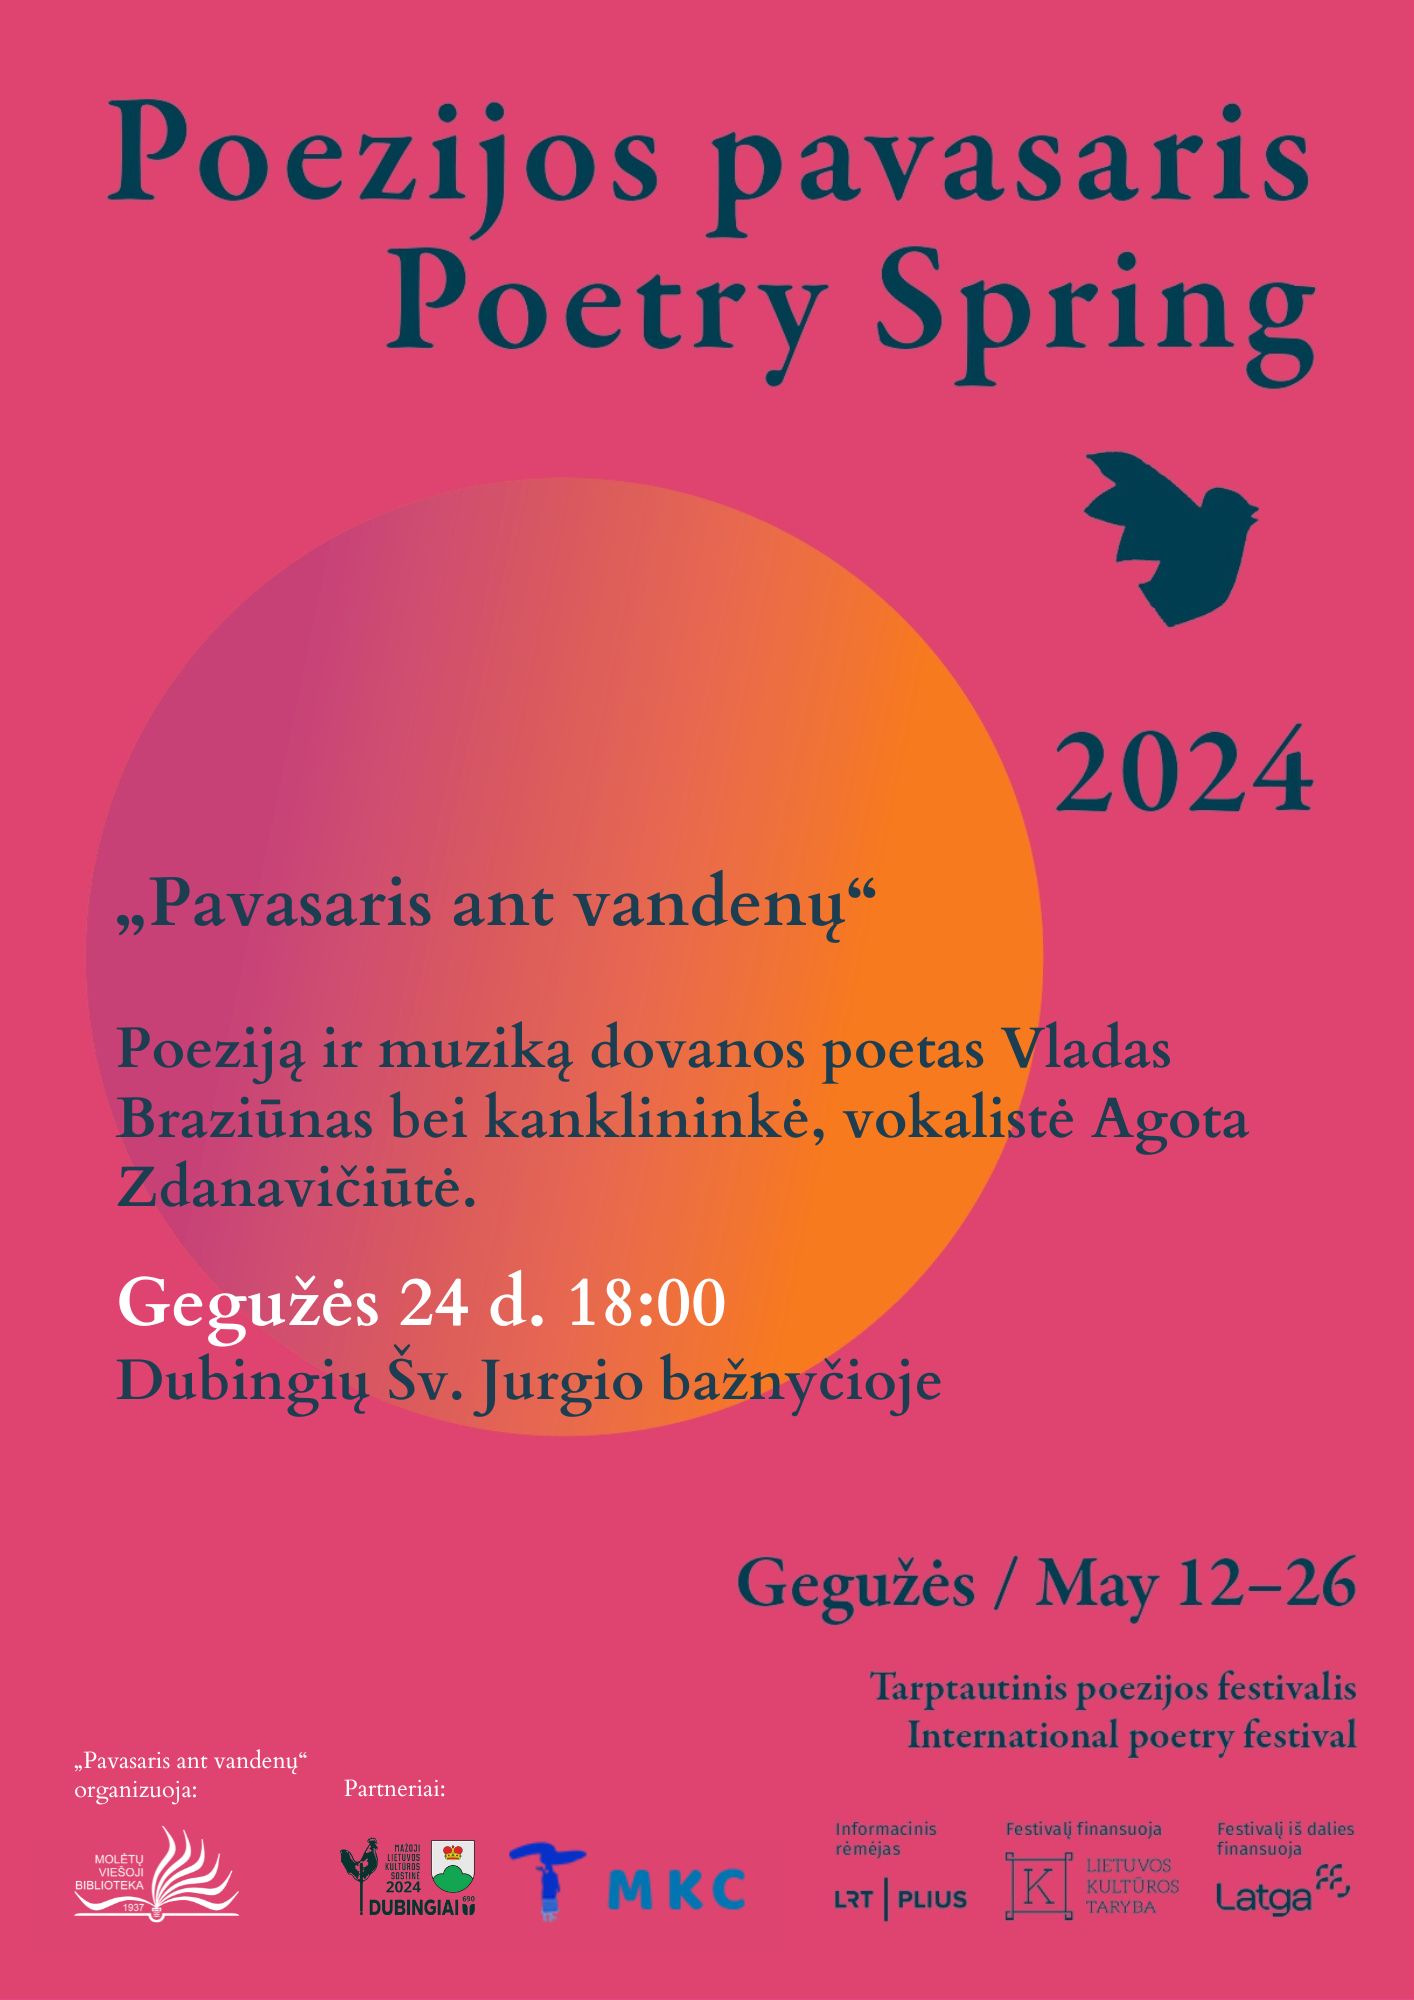 Poezijos pavasaris. Vladas Braziūnas kartu su kanklininke, vokaliste Agota Zdanavičiūtė